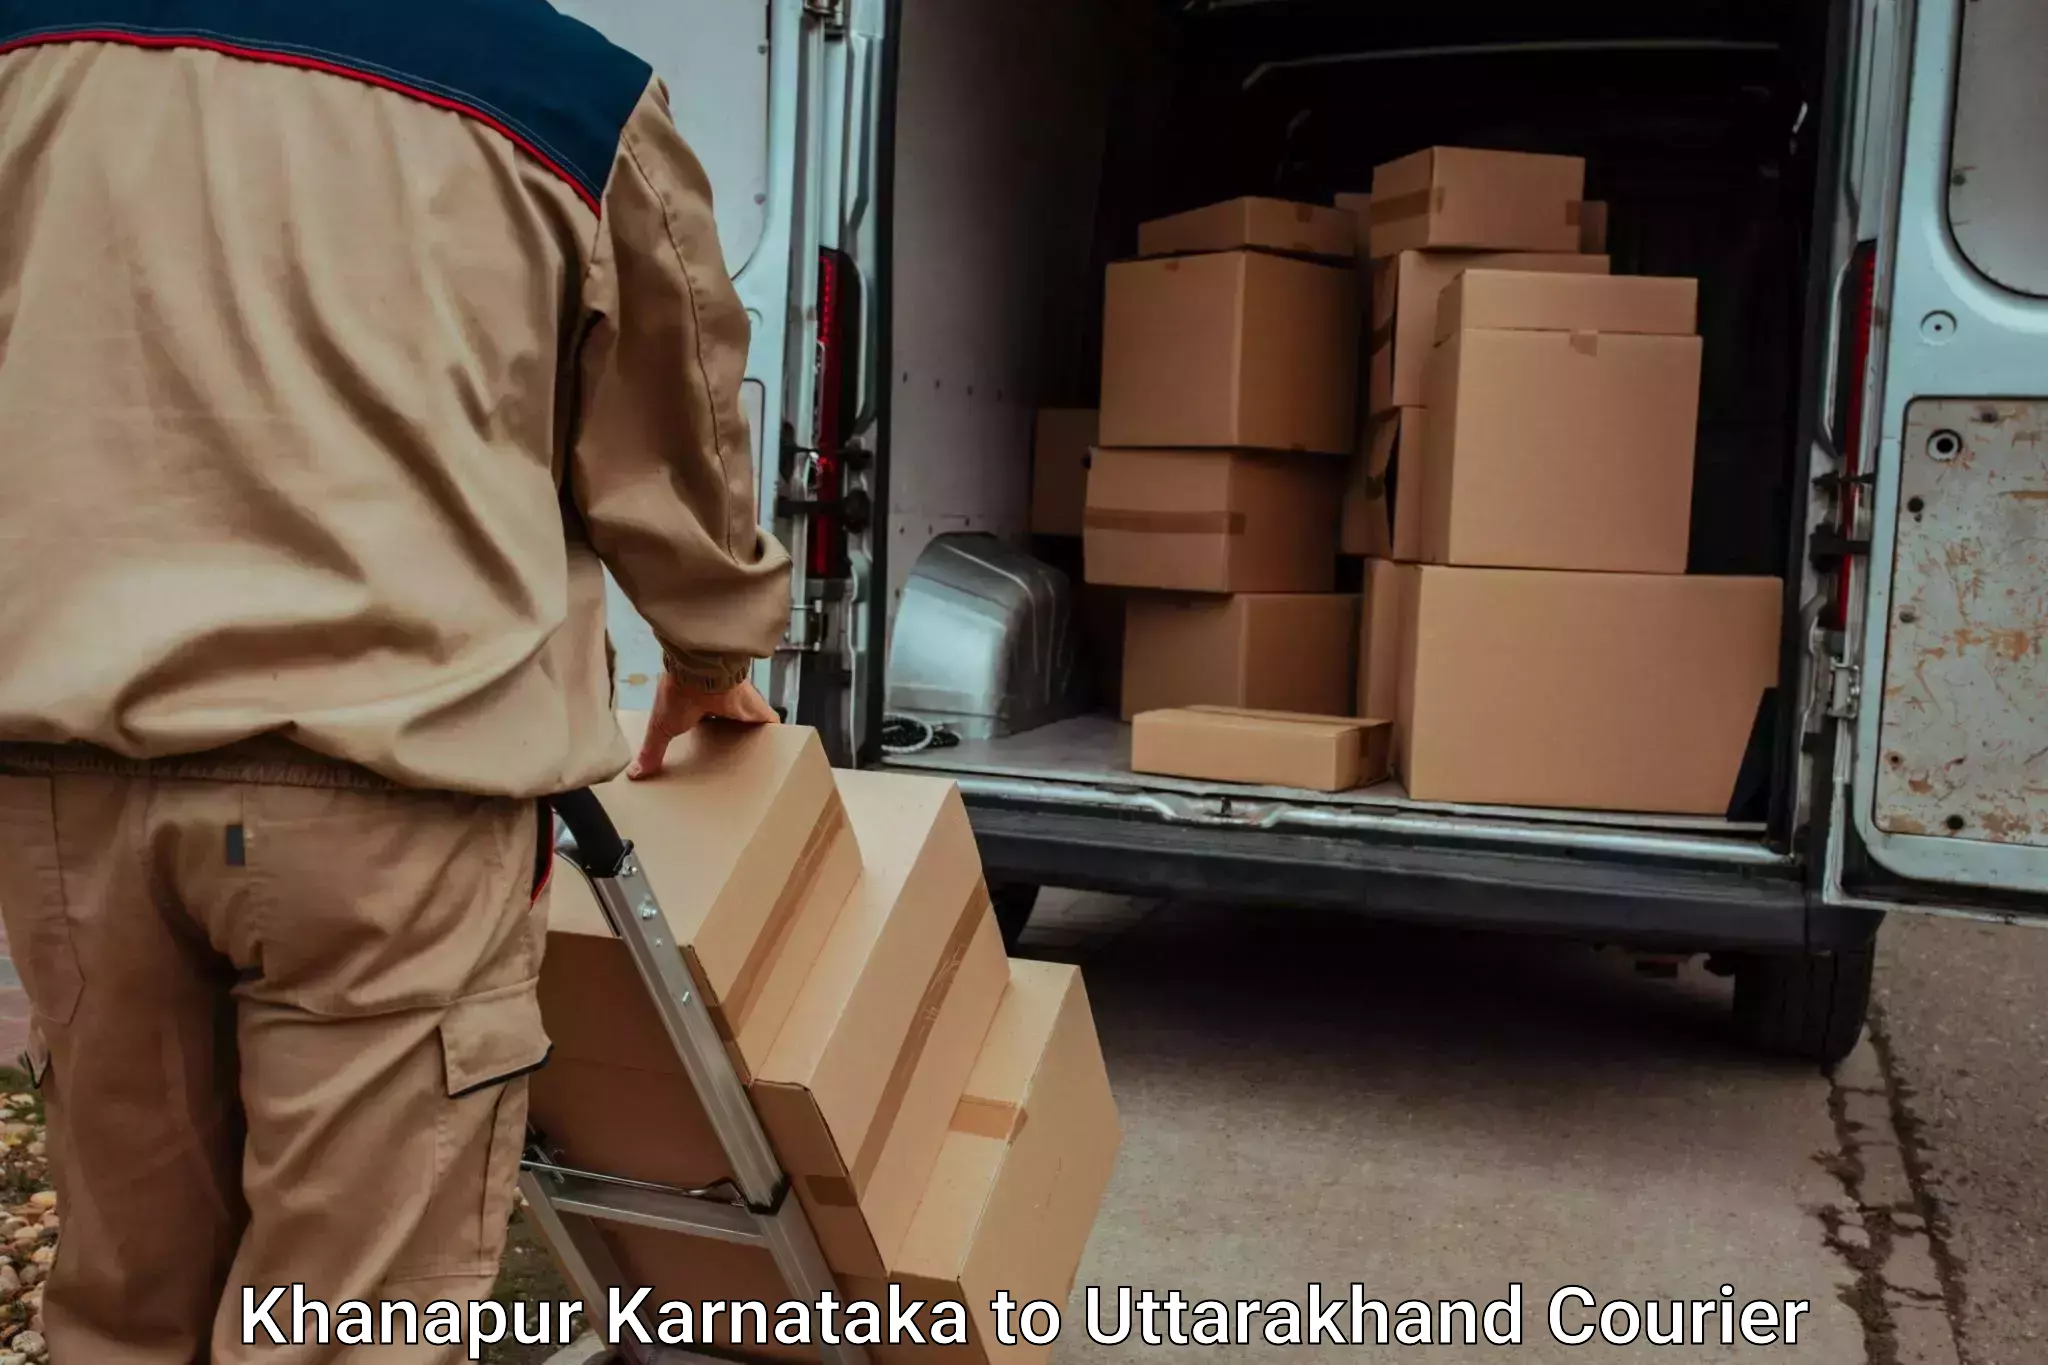 Emergency baggage service Khanapur Karnataka to Haldwani